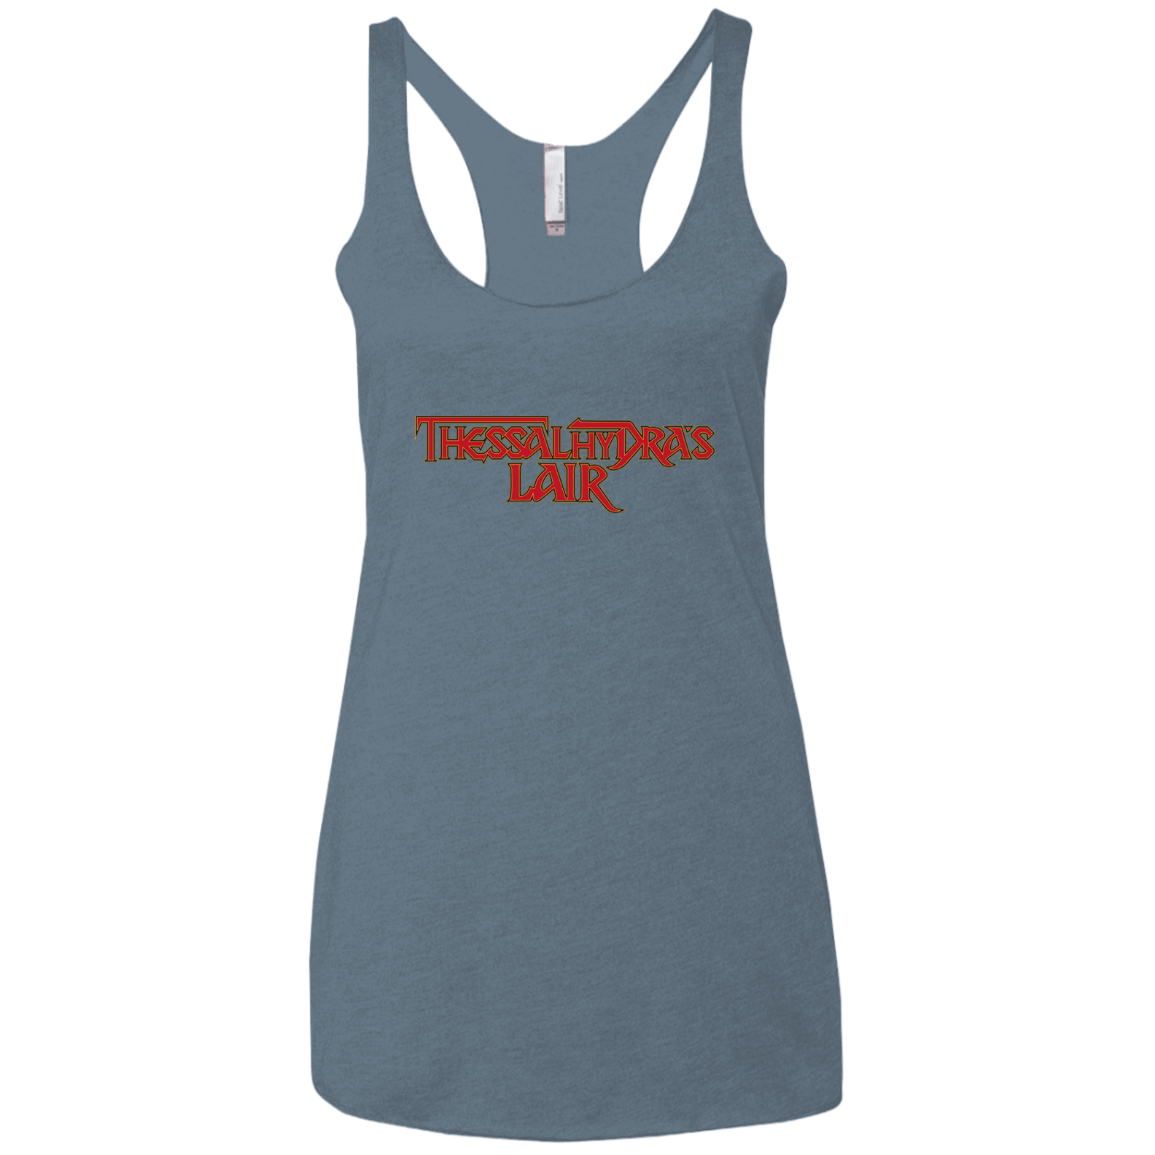 T-Shirts Indigo / X-Small Thessalhydras Lair Women's Triblend Racerback Tank